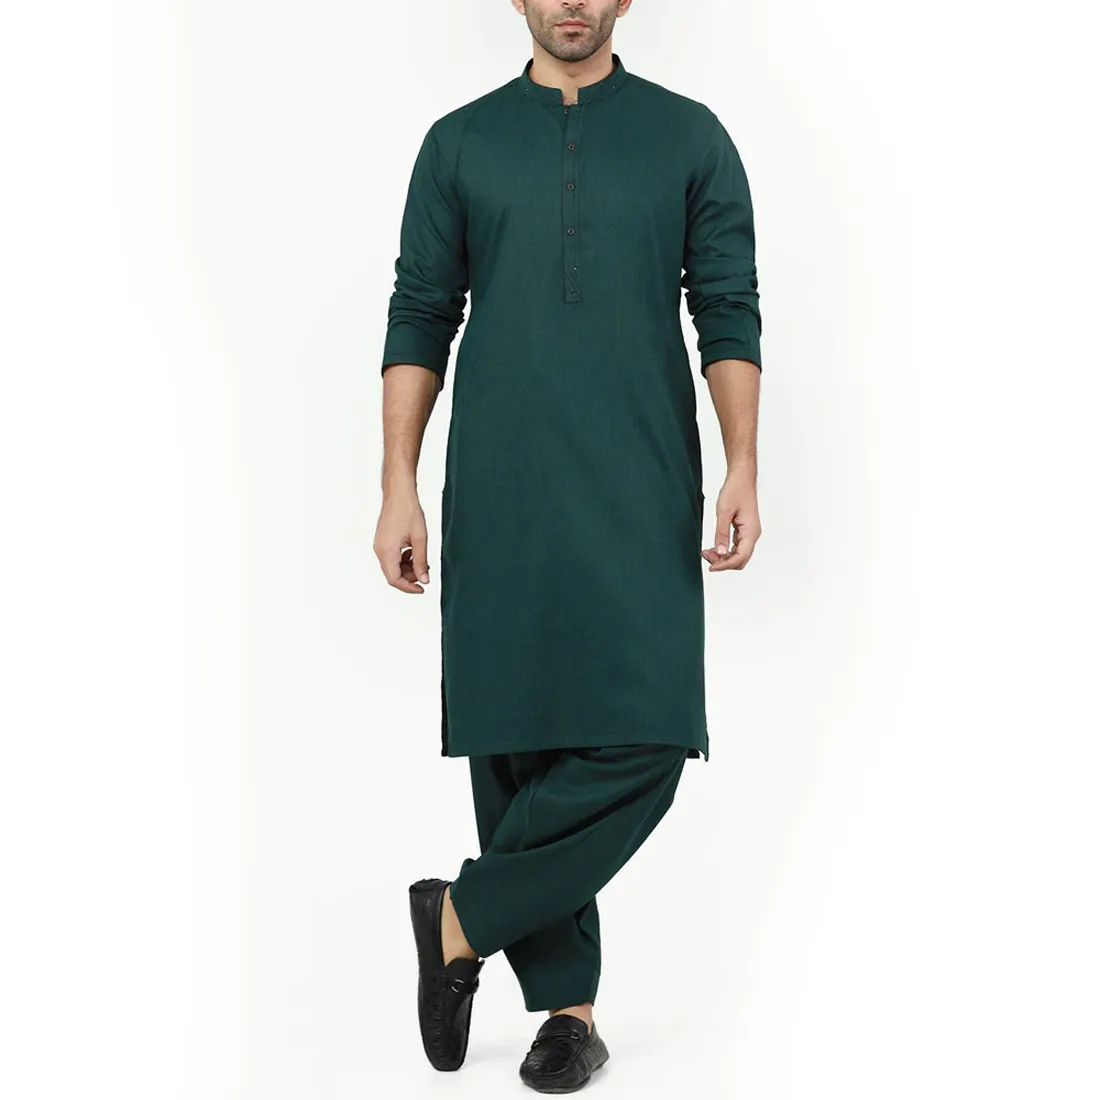 Unforgettable Design for Pakistani Weddings Shalwar Kameez Outfits and Pakistani Designer Kurta Pajama Sets